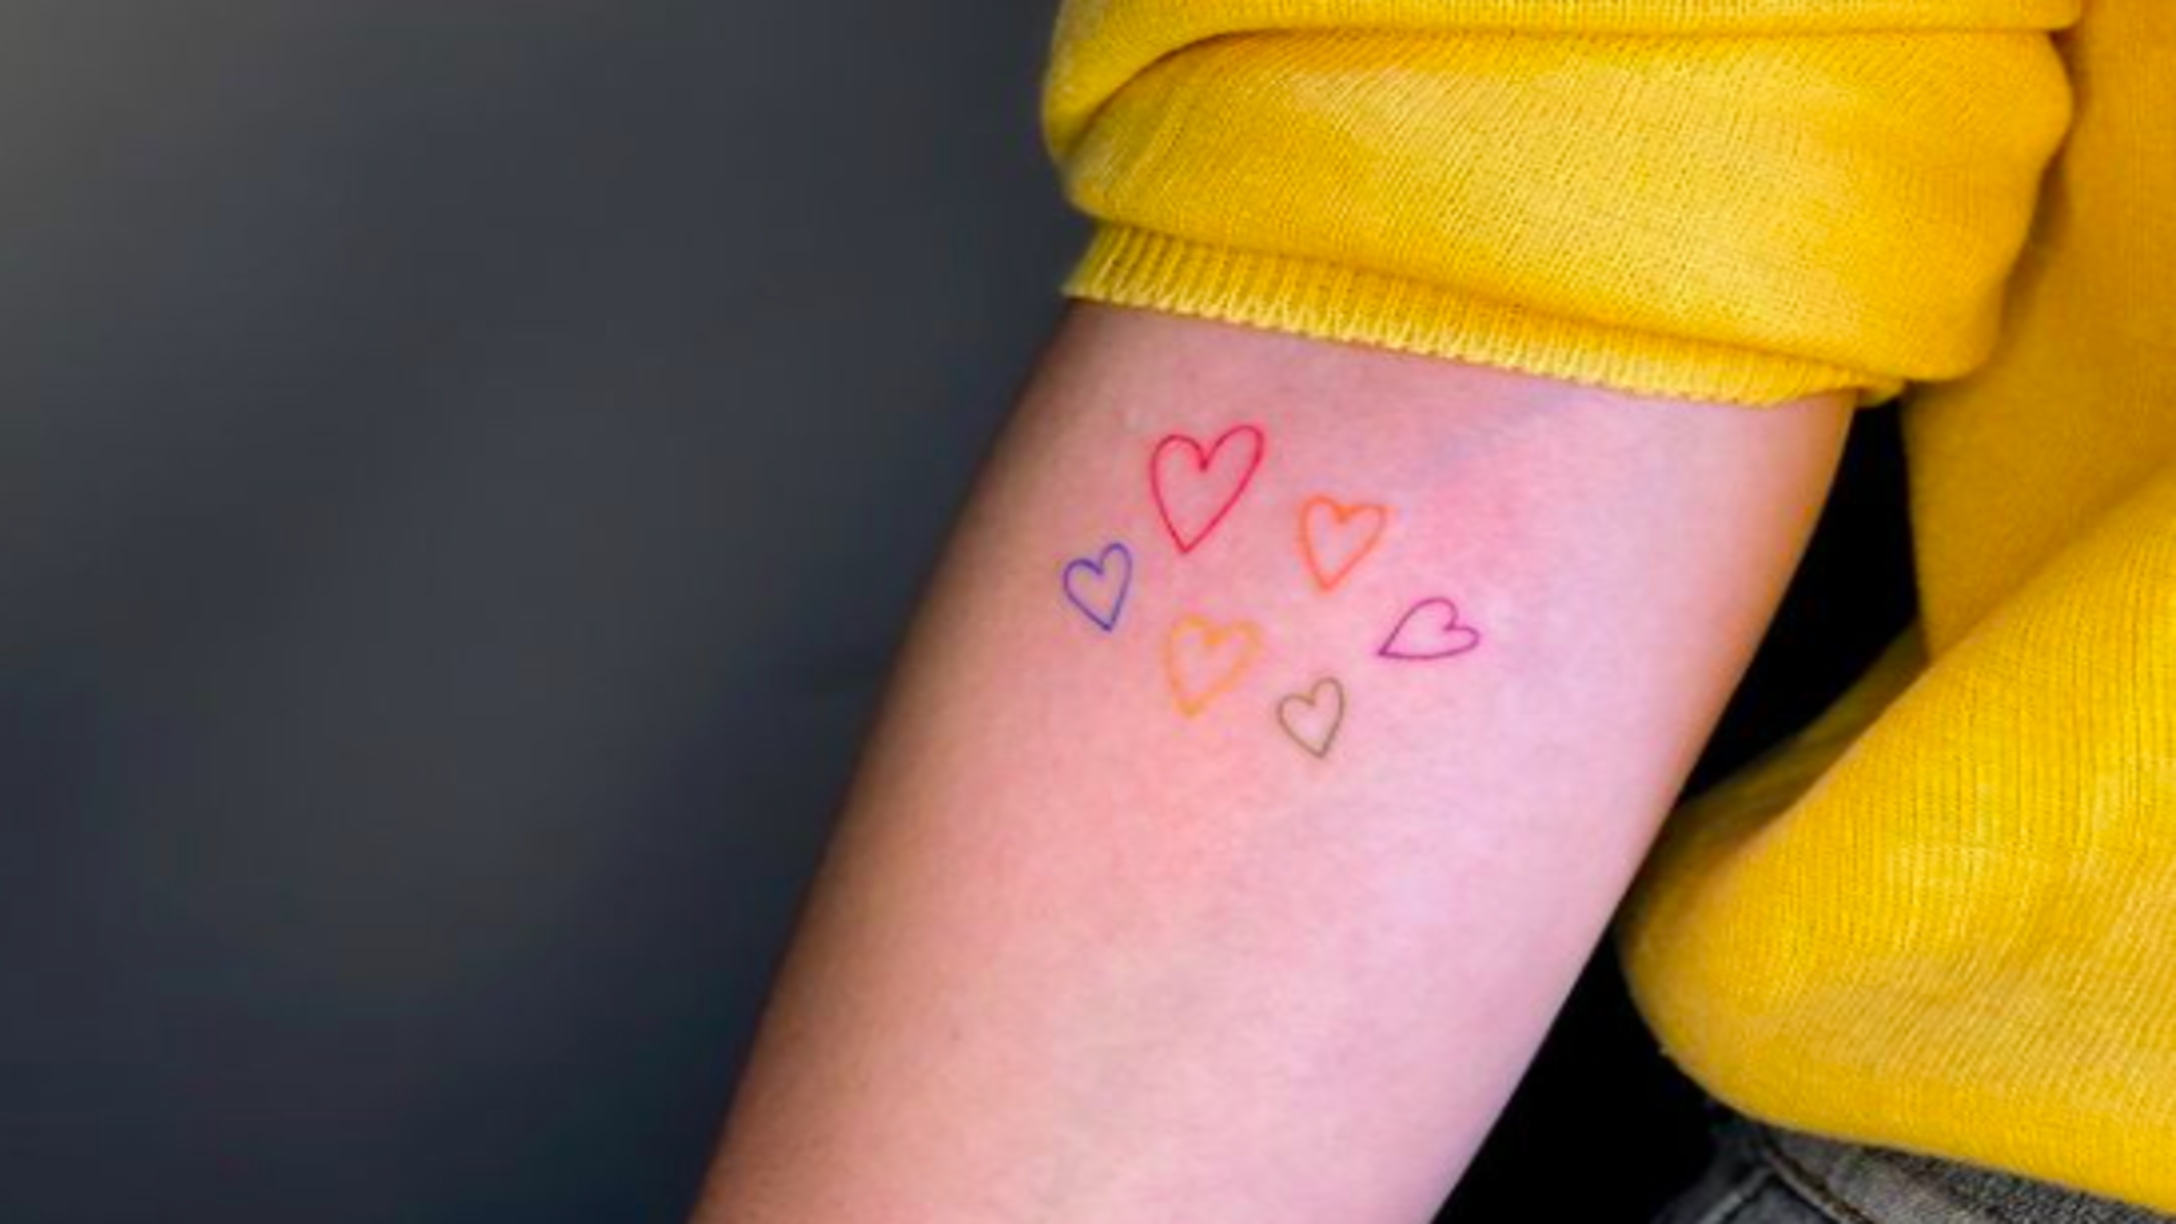 55 Amazing Heartbeat Tattoo Designs You Should Consider  Wild Tattoo Art